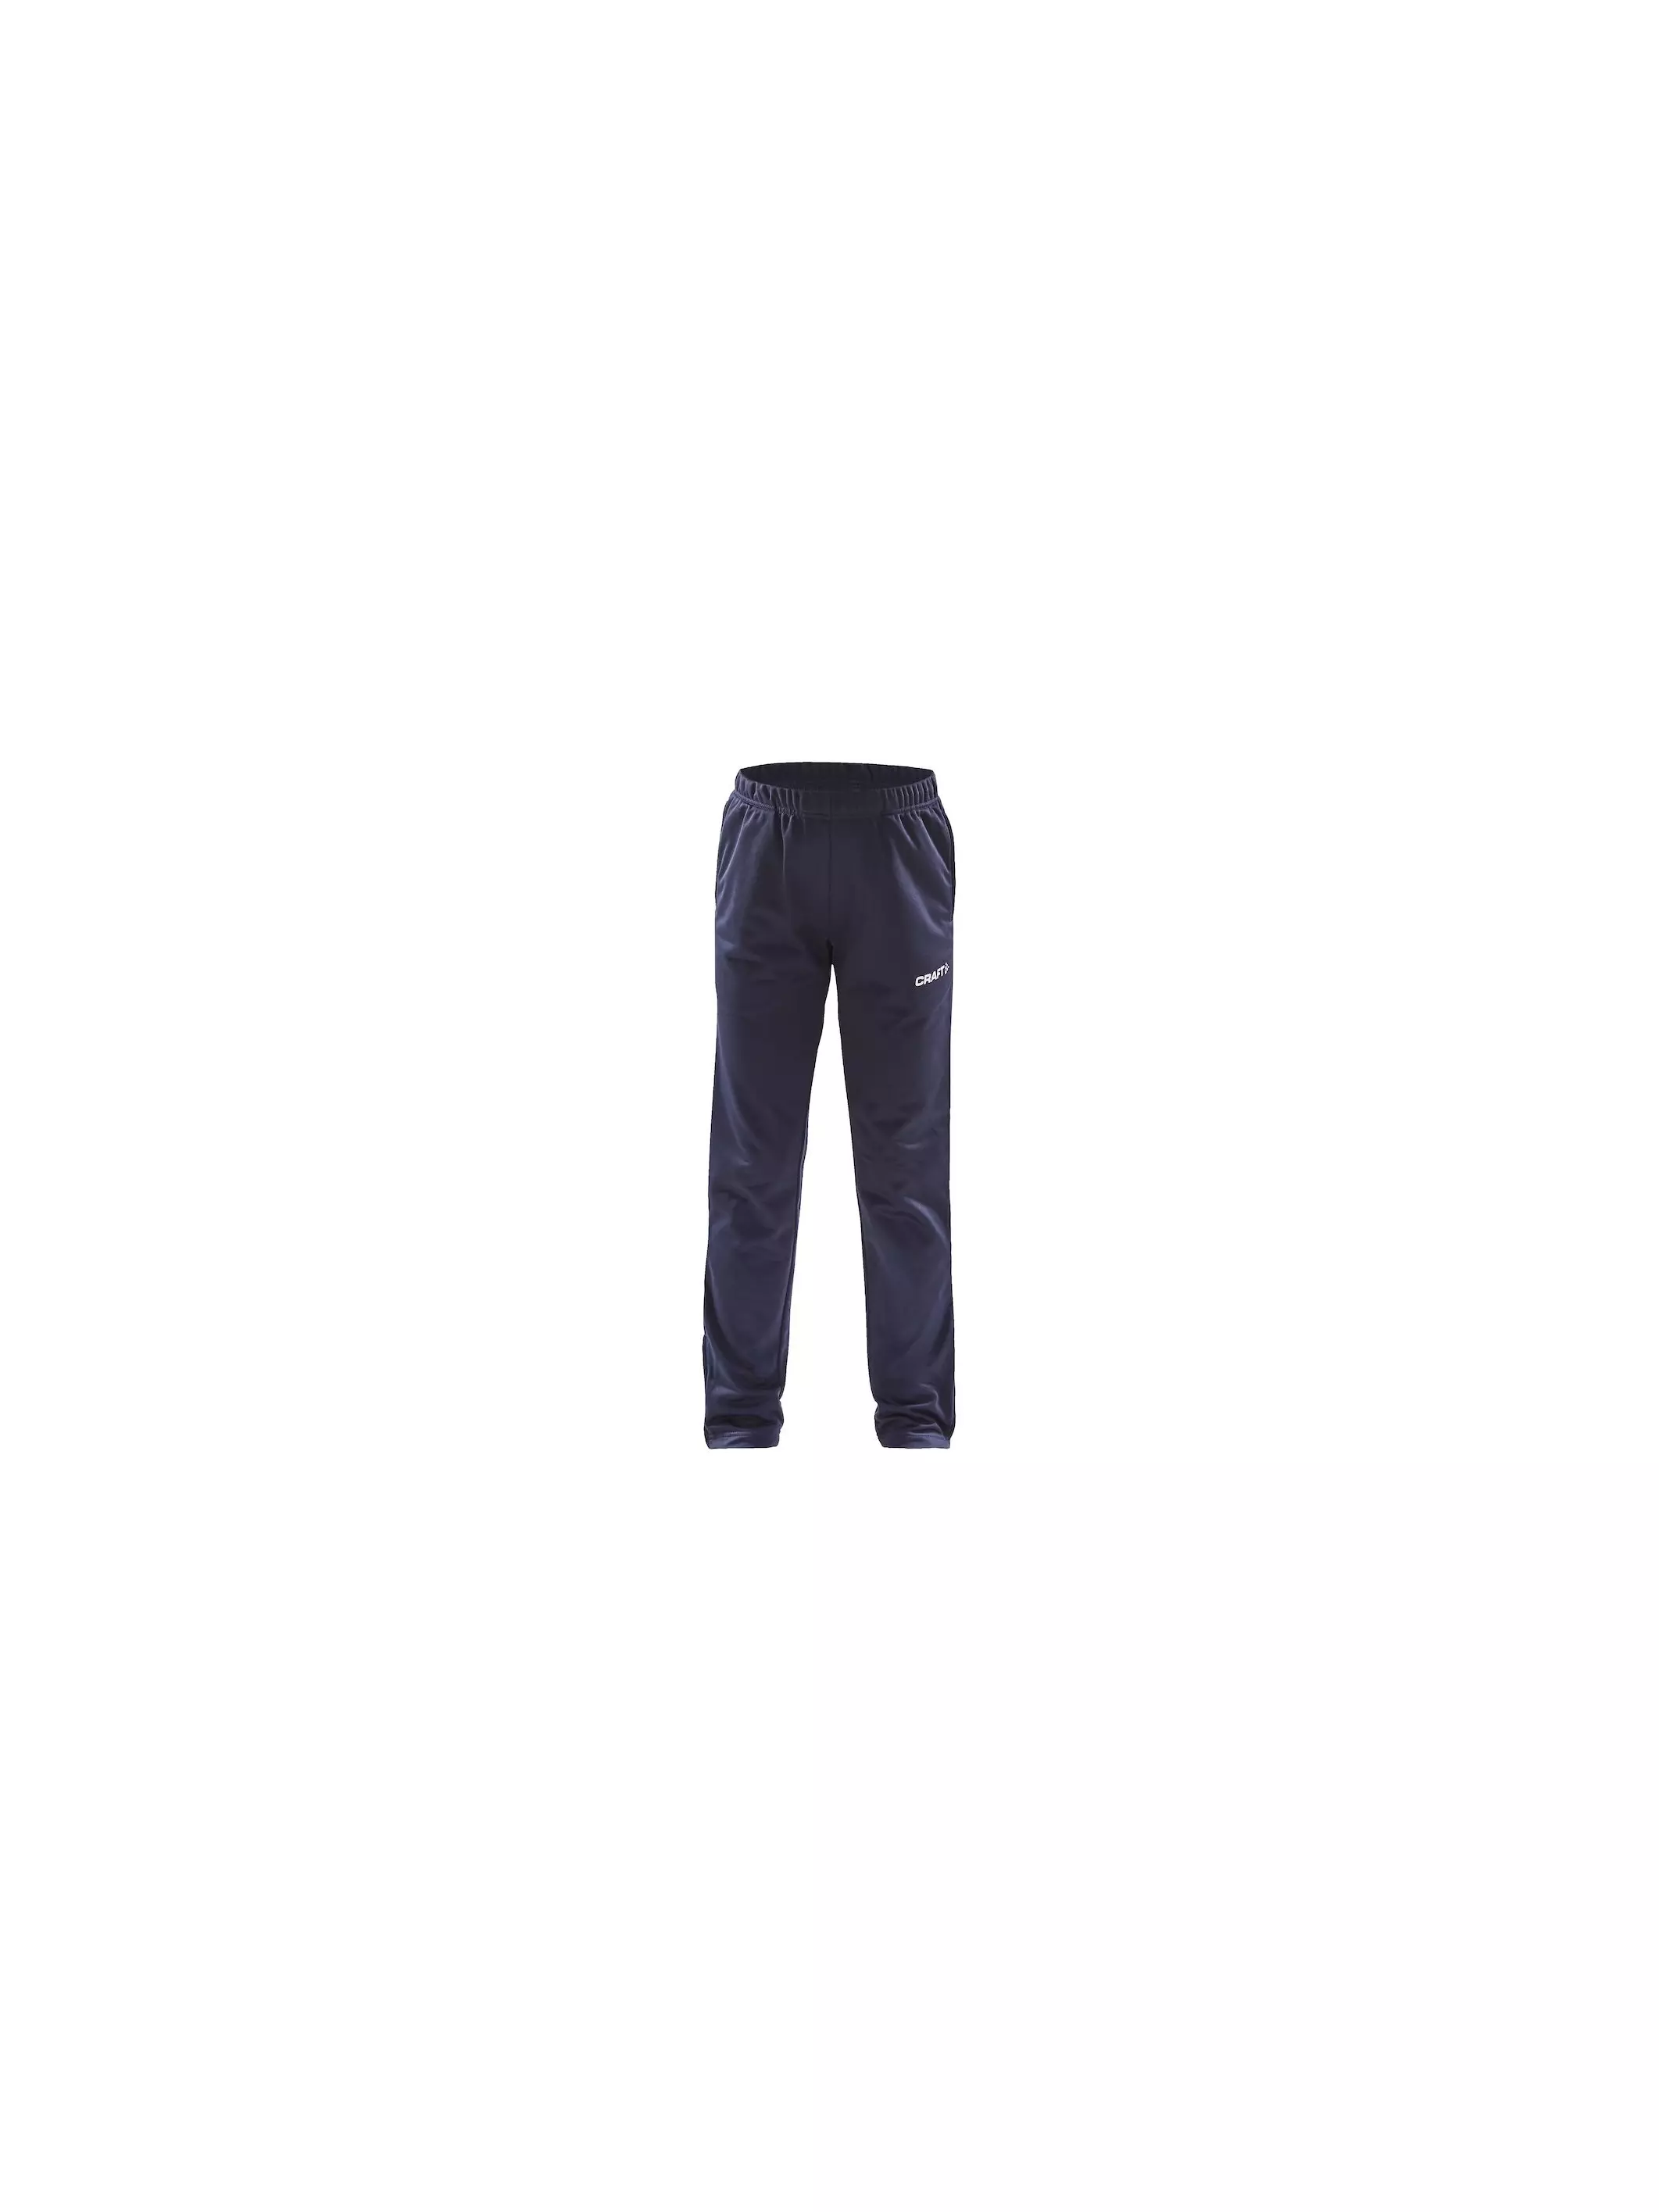 Pantalons & Collants Craft SQUAD PANT JR - 1908110